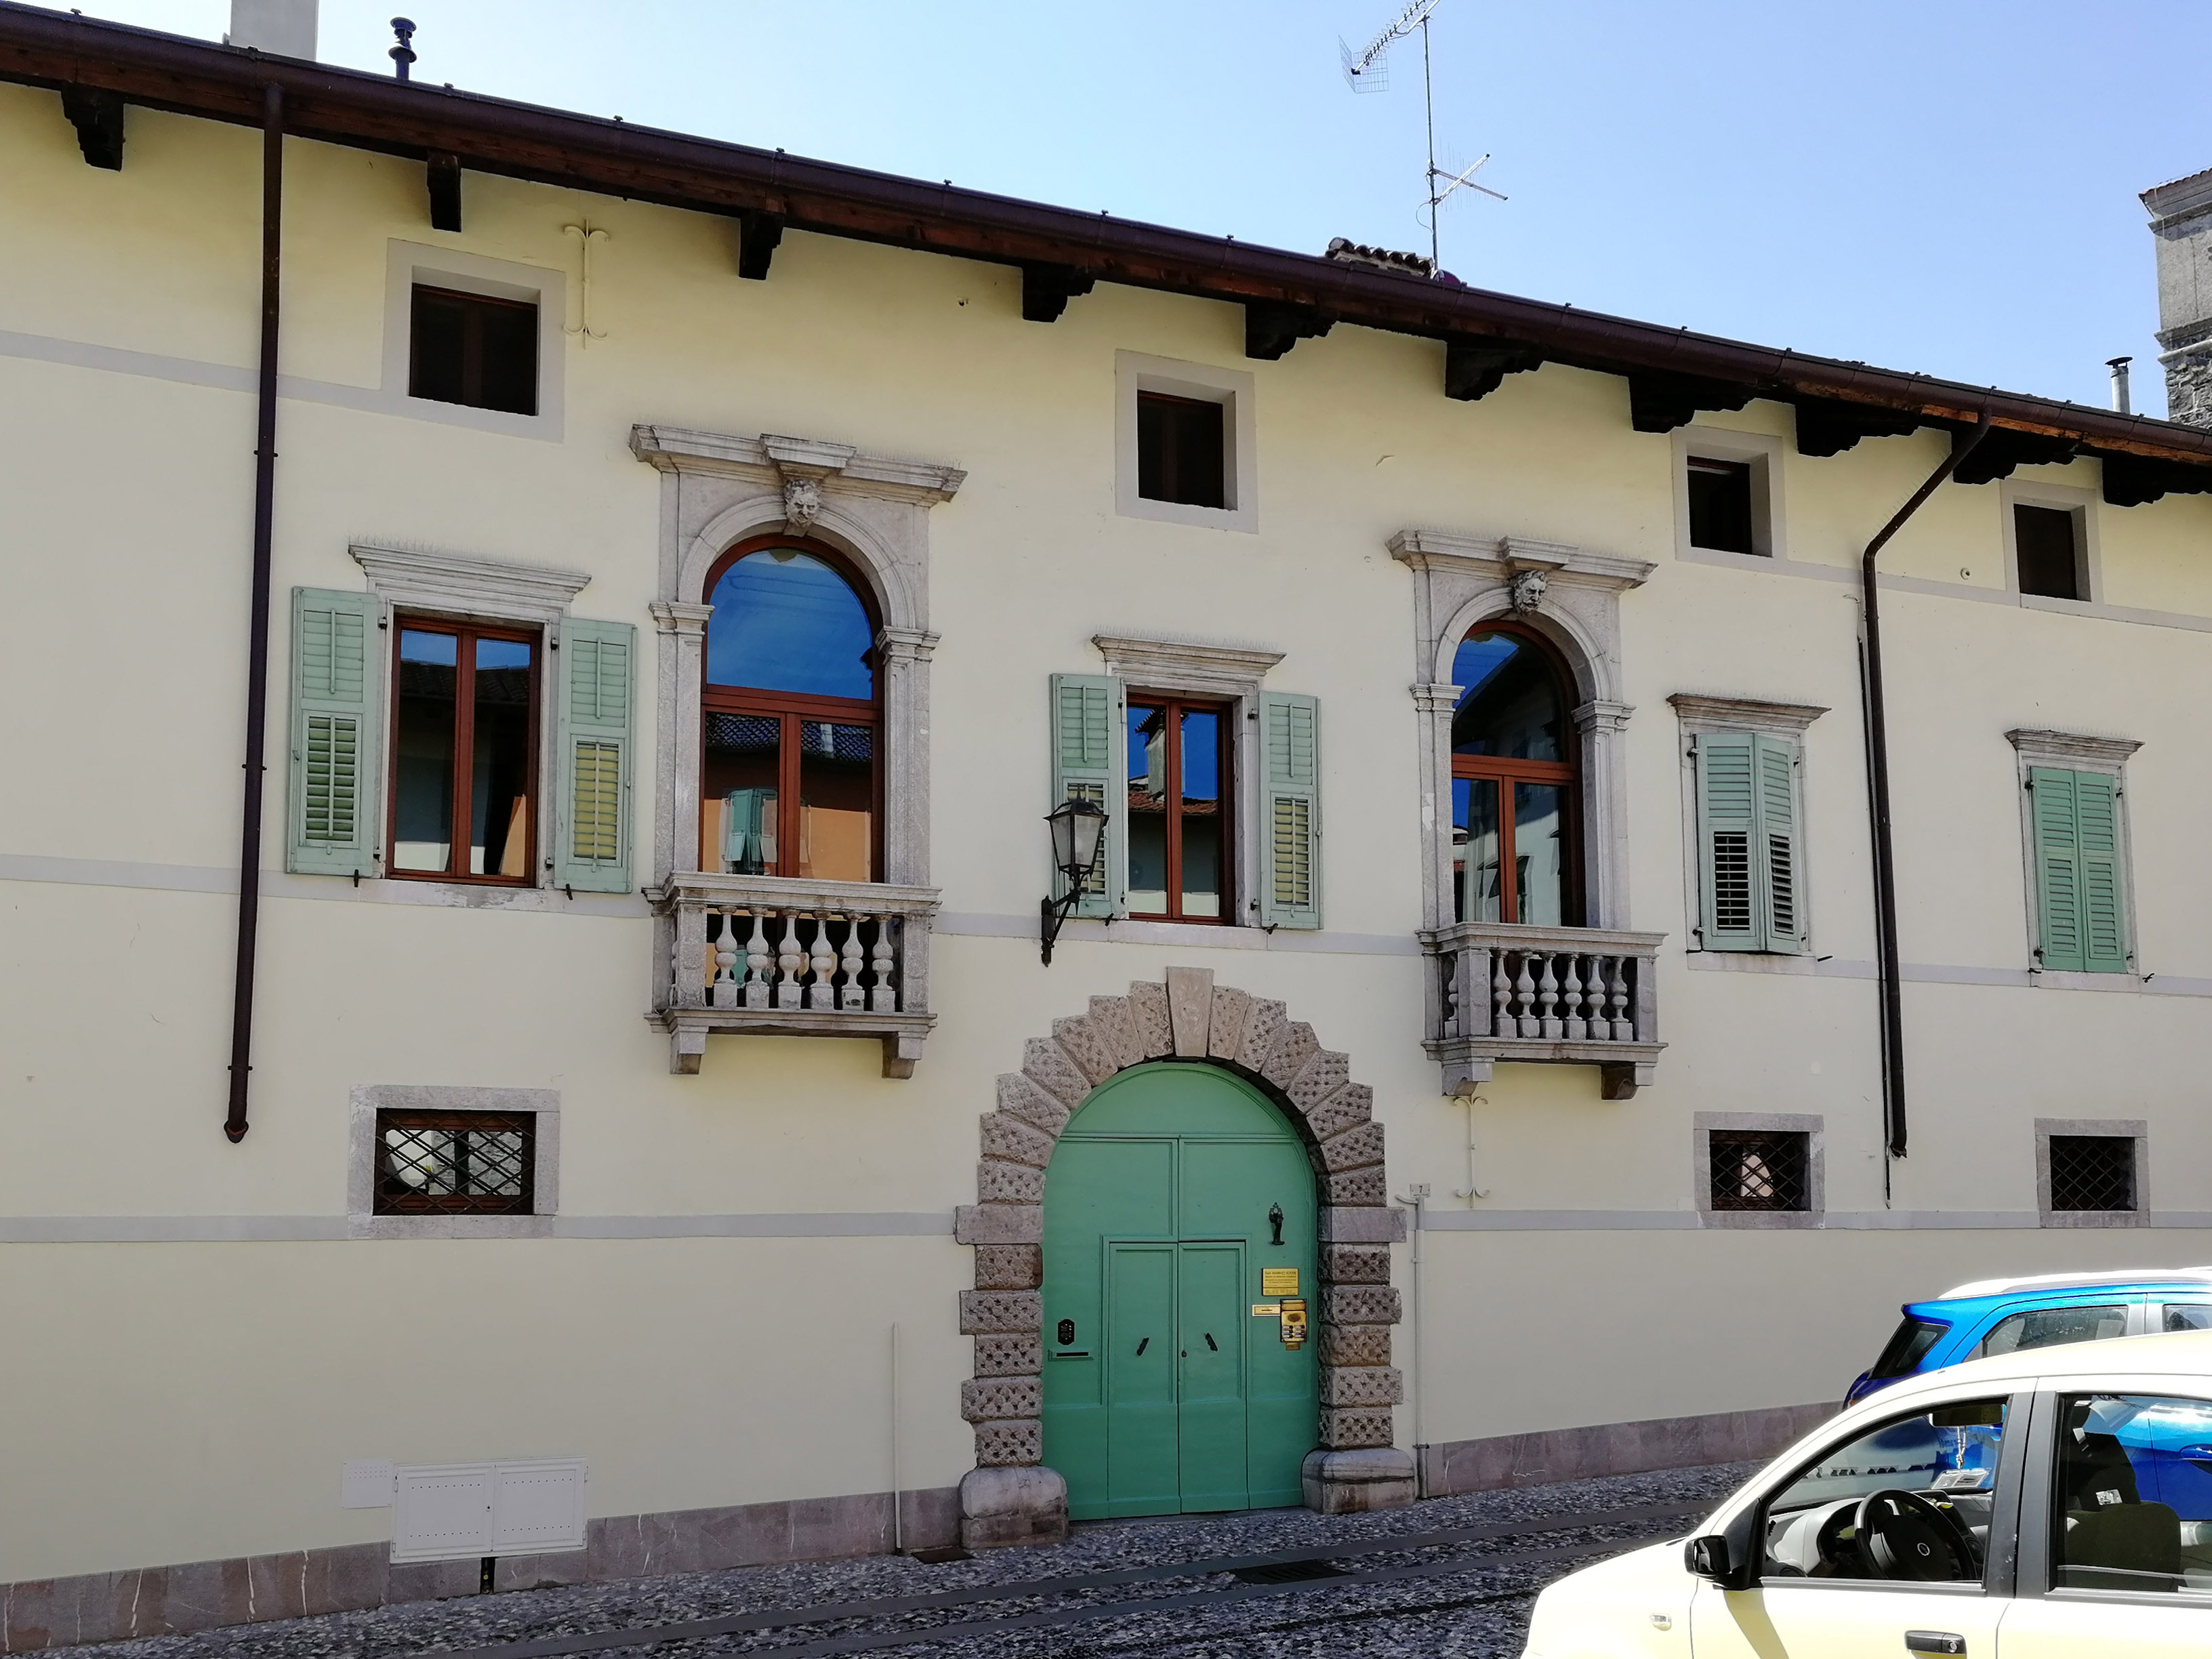 Antica casa Bonessa (casa, privata) - Cividale del Friuli (UD) 